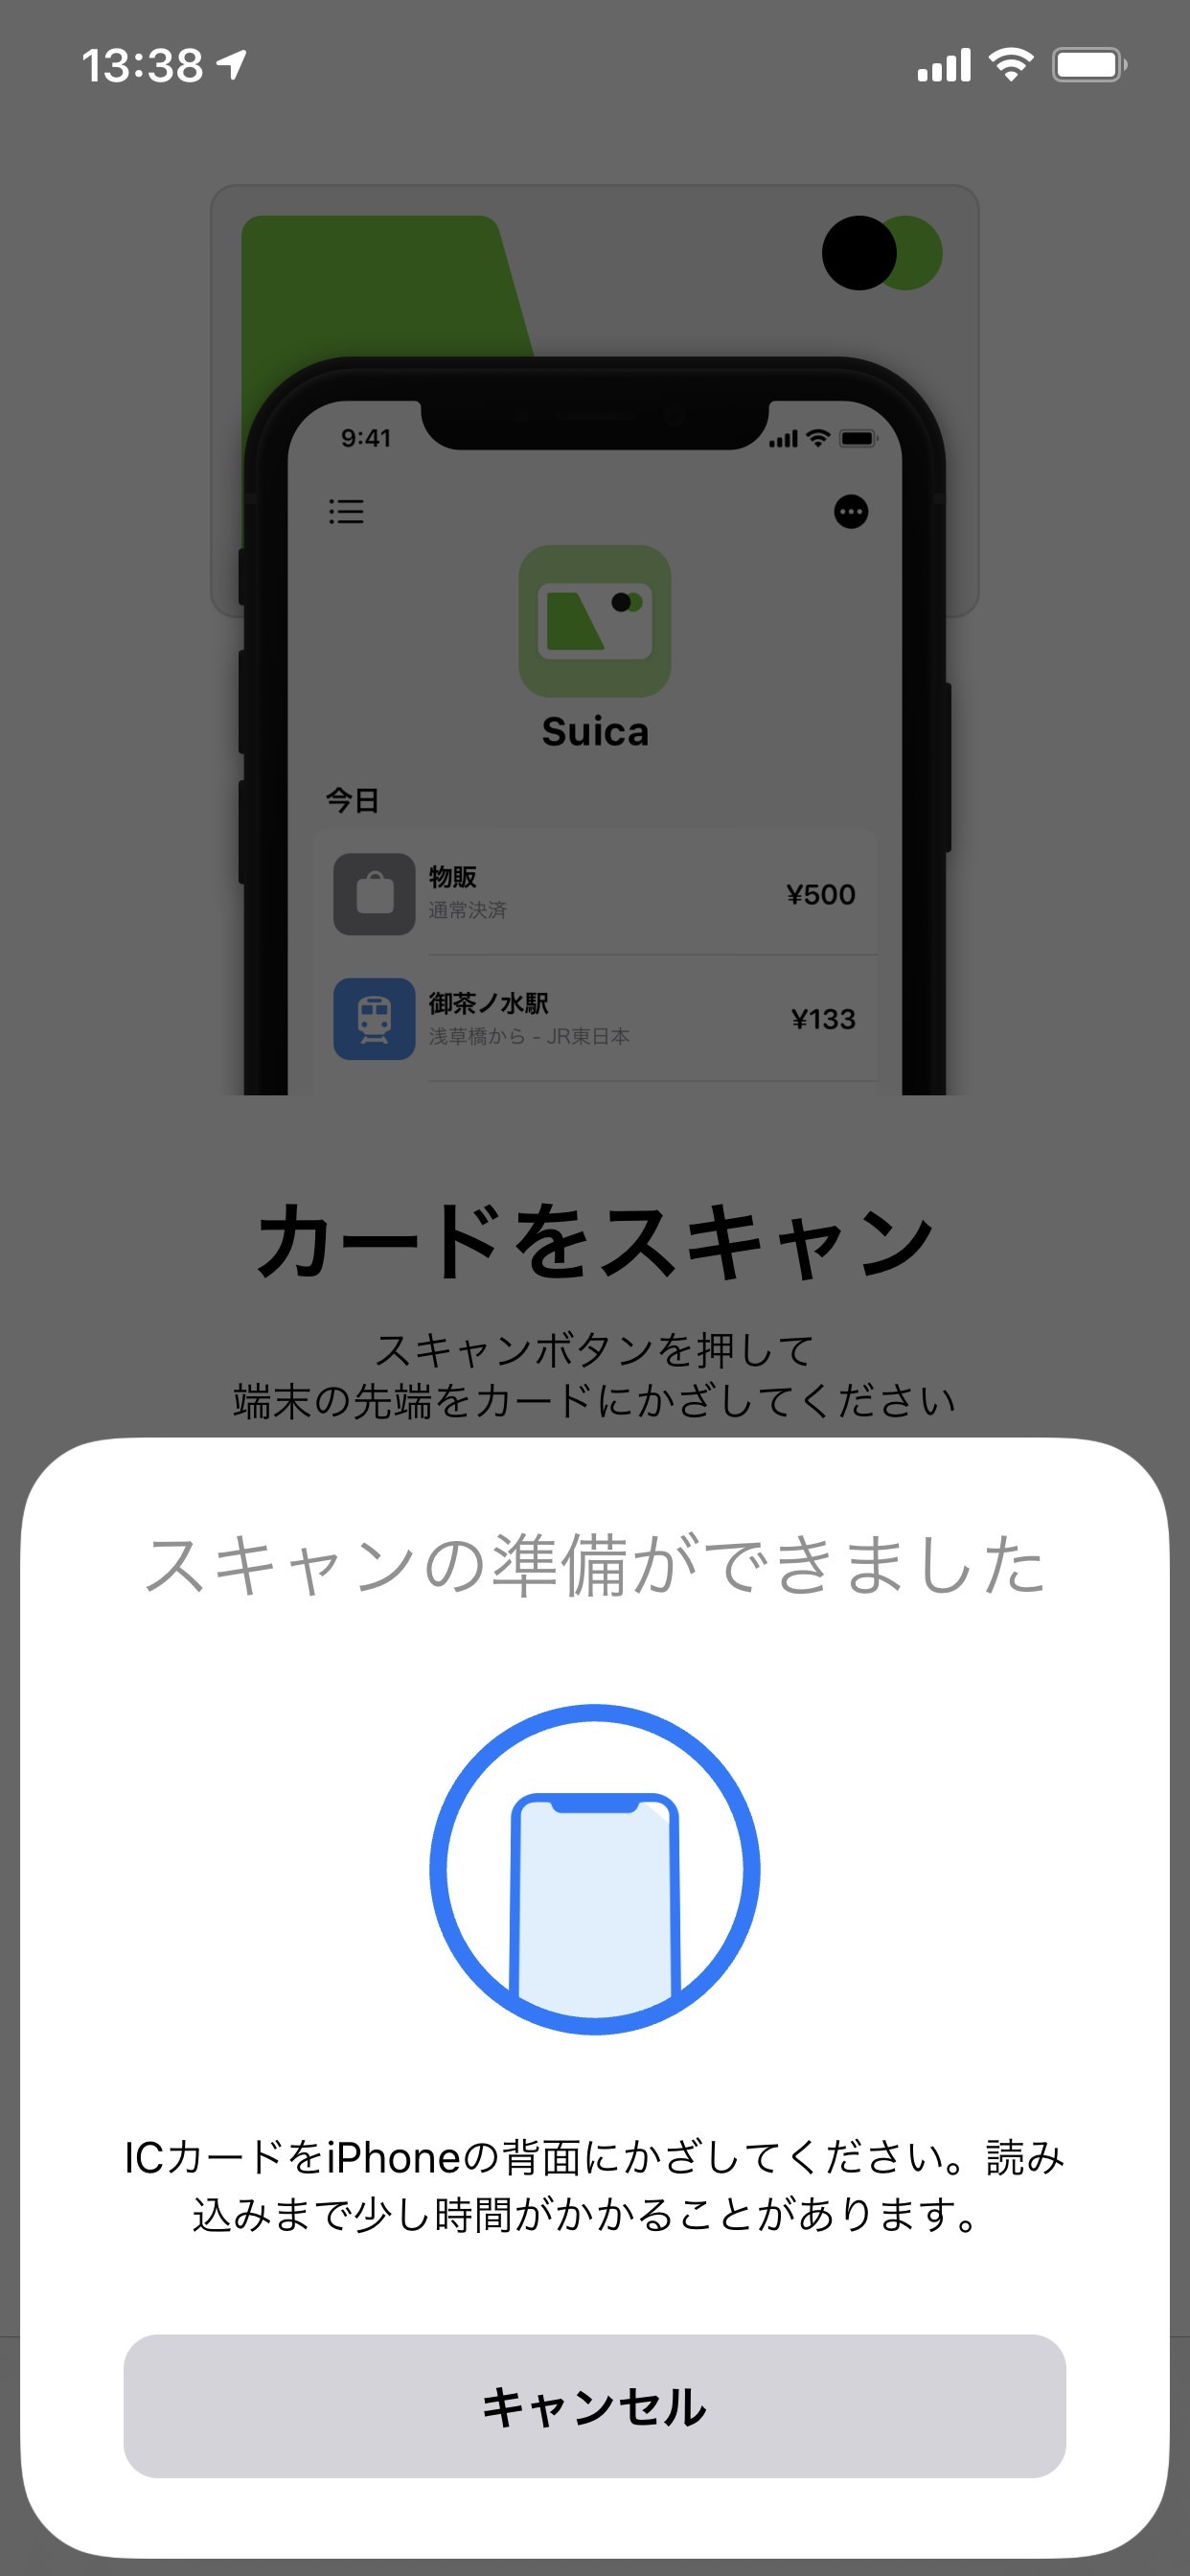 「ICリーダー」Suica・PASMOなど交通系ICカードやEdy・nanaco・WAONの残高を読み取るiPhoneアプリ